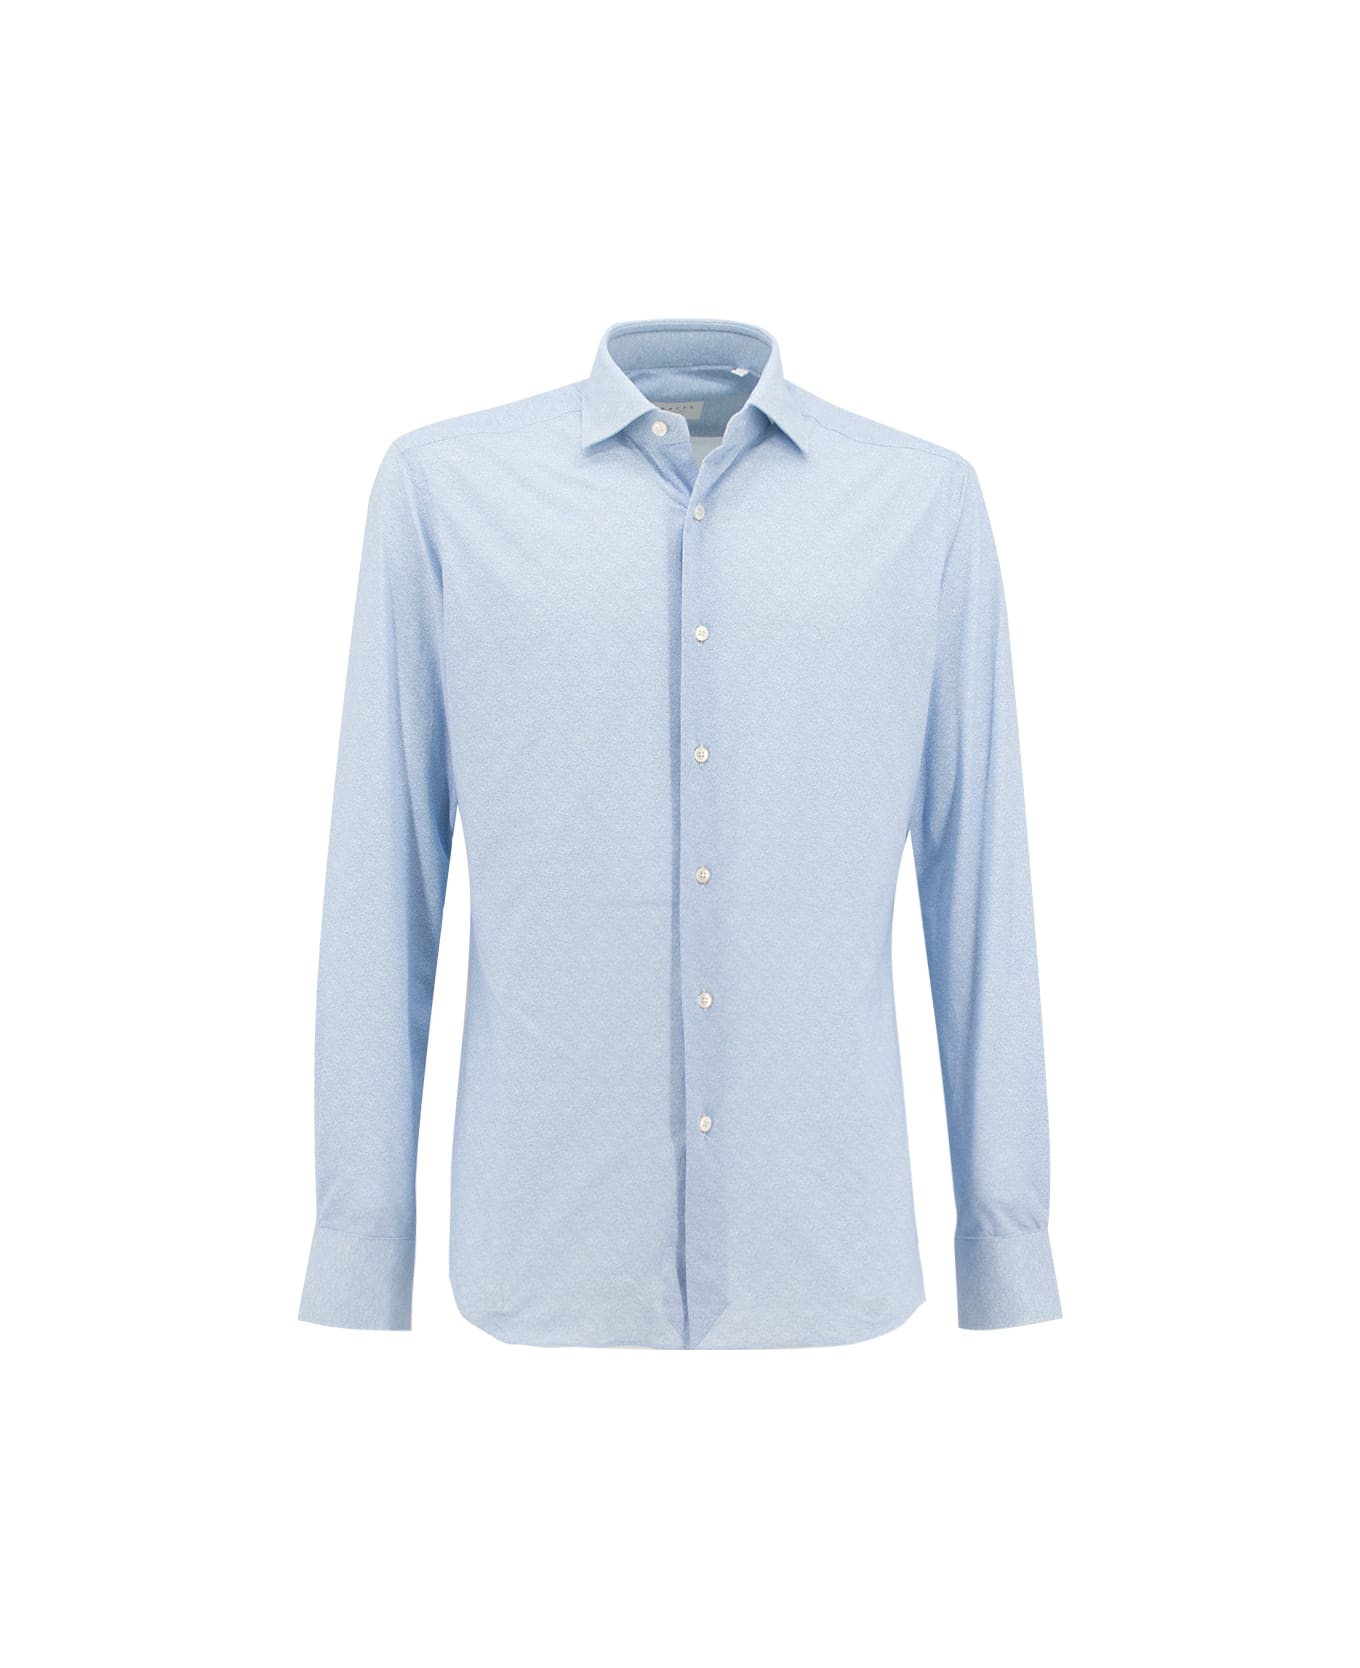 Xacus Shirt - BLUE MELANGE